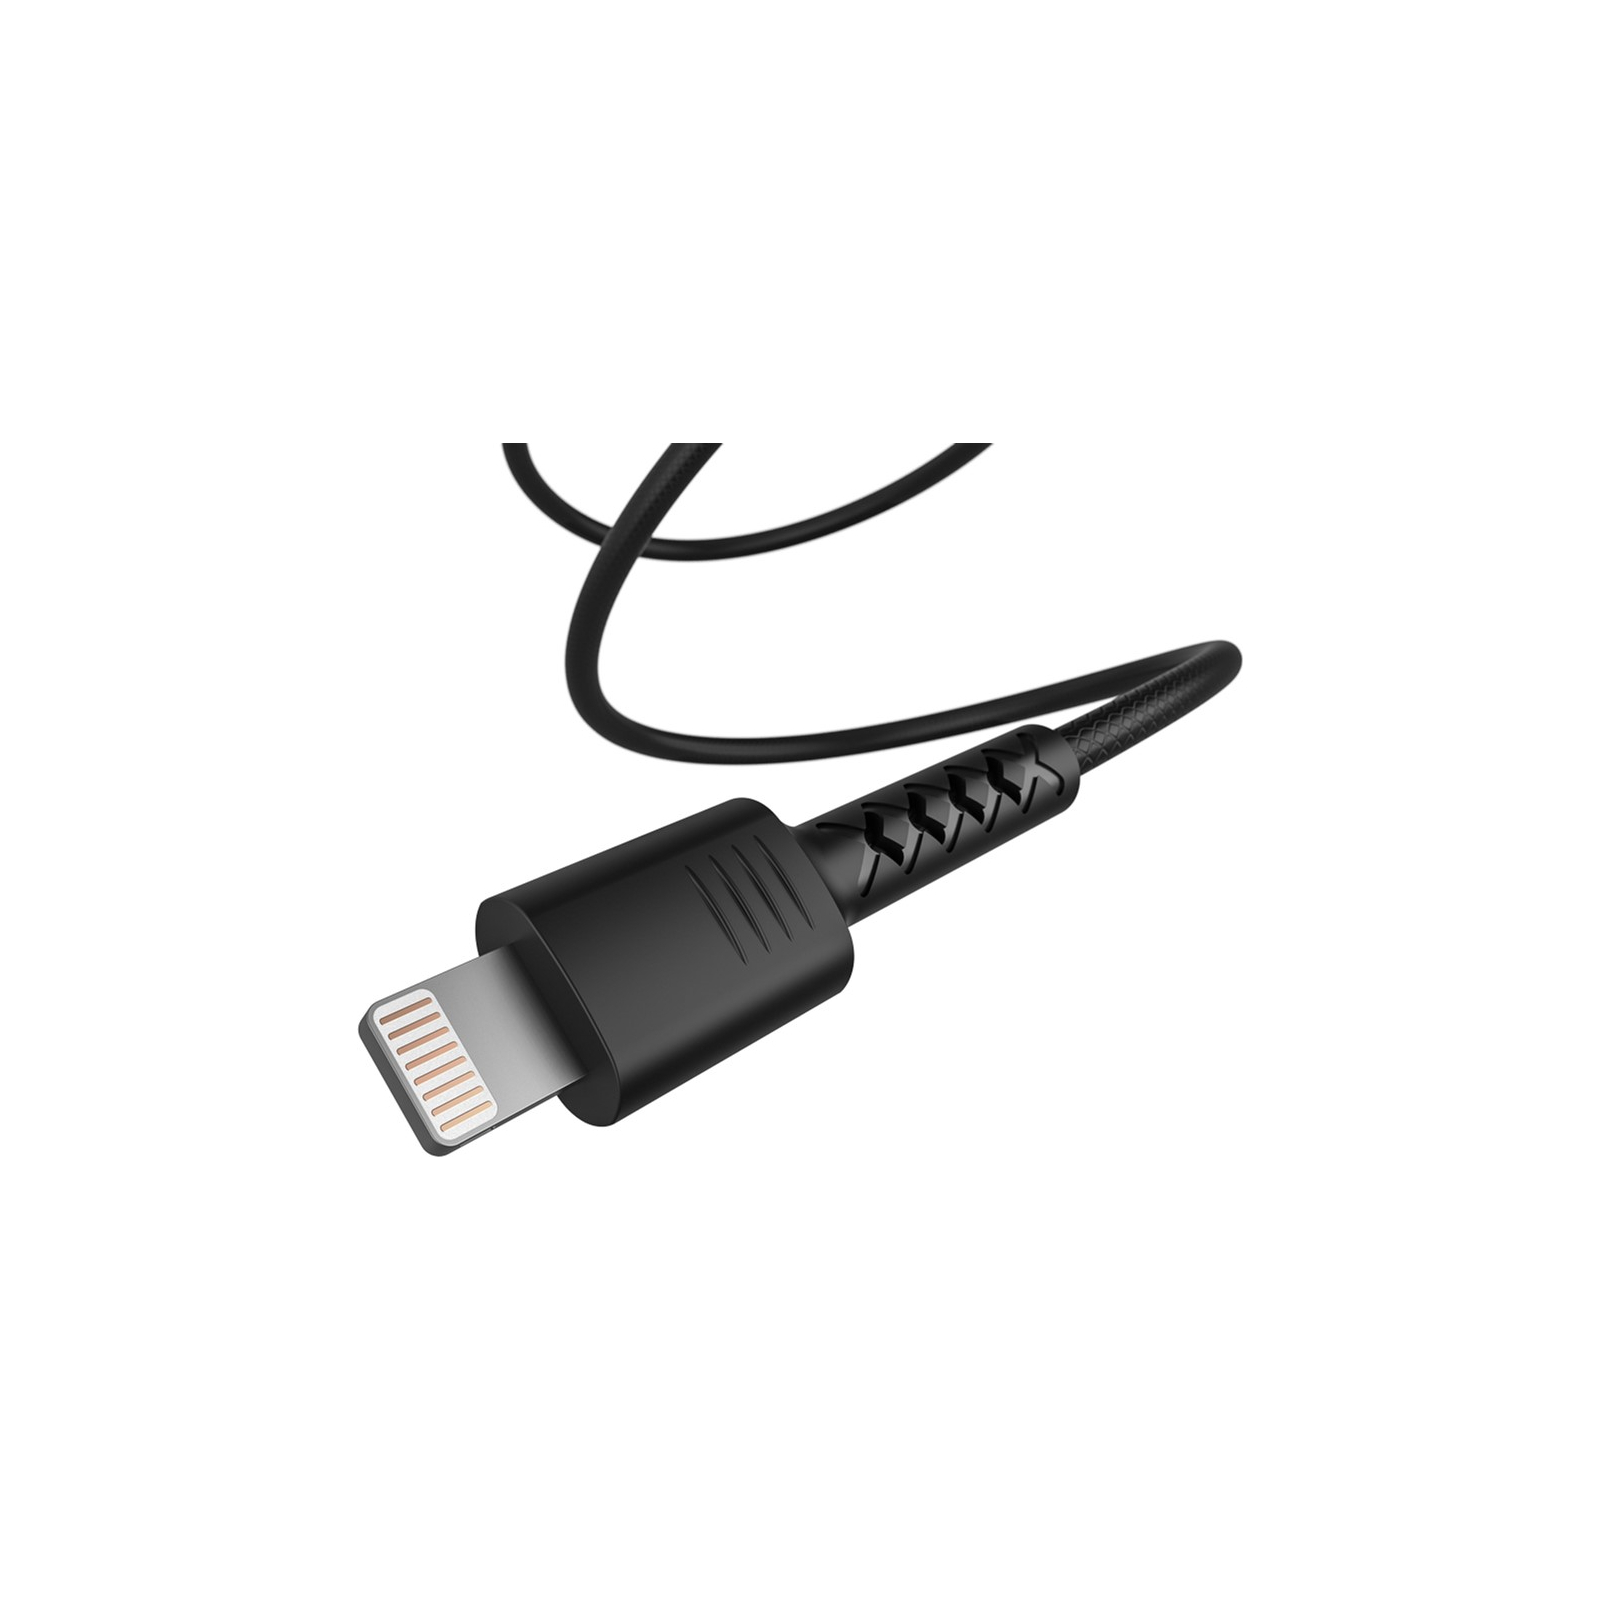 Дата кабель USB 2.0 AM to Lightning 1.0m Soft white/lime Pixus (4897058531183) изображение 3